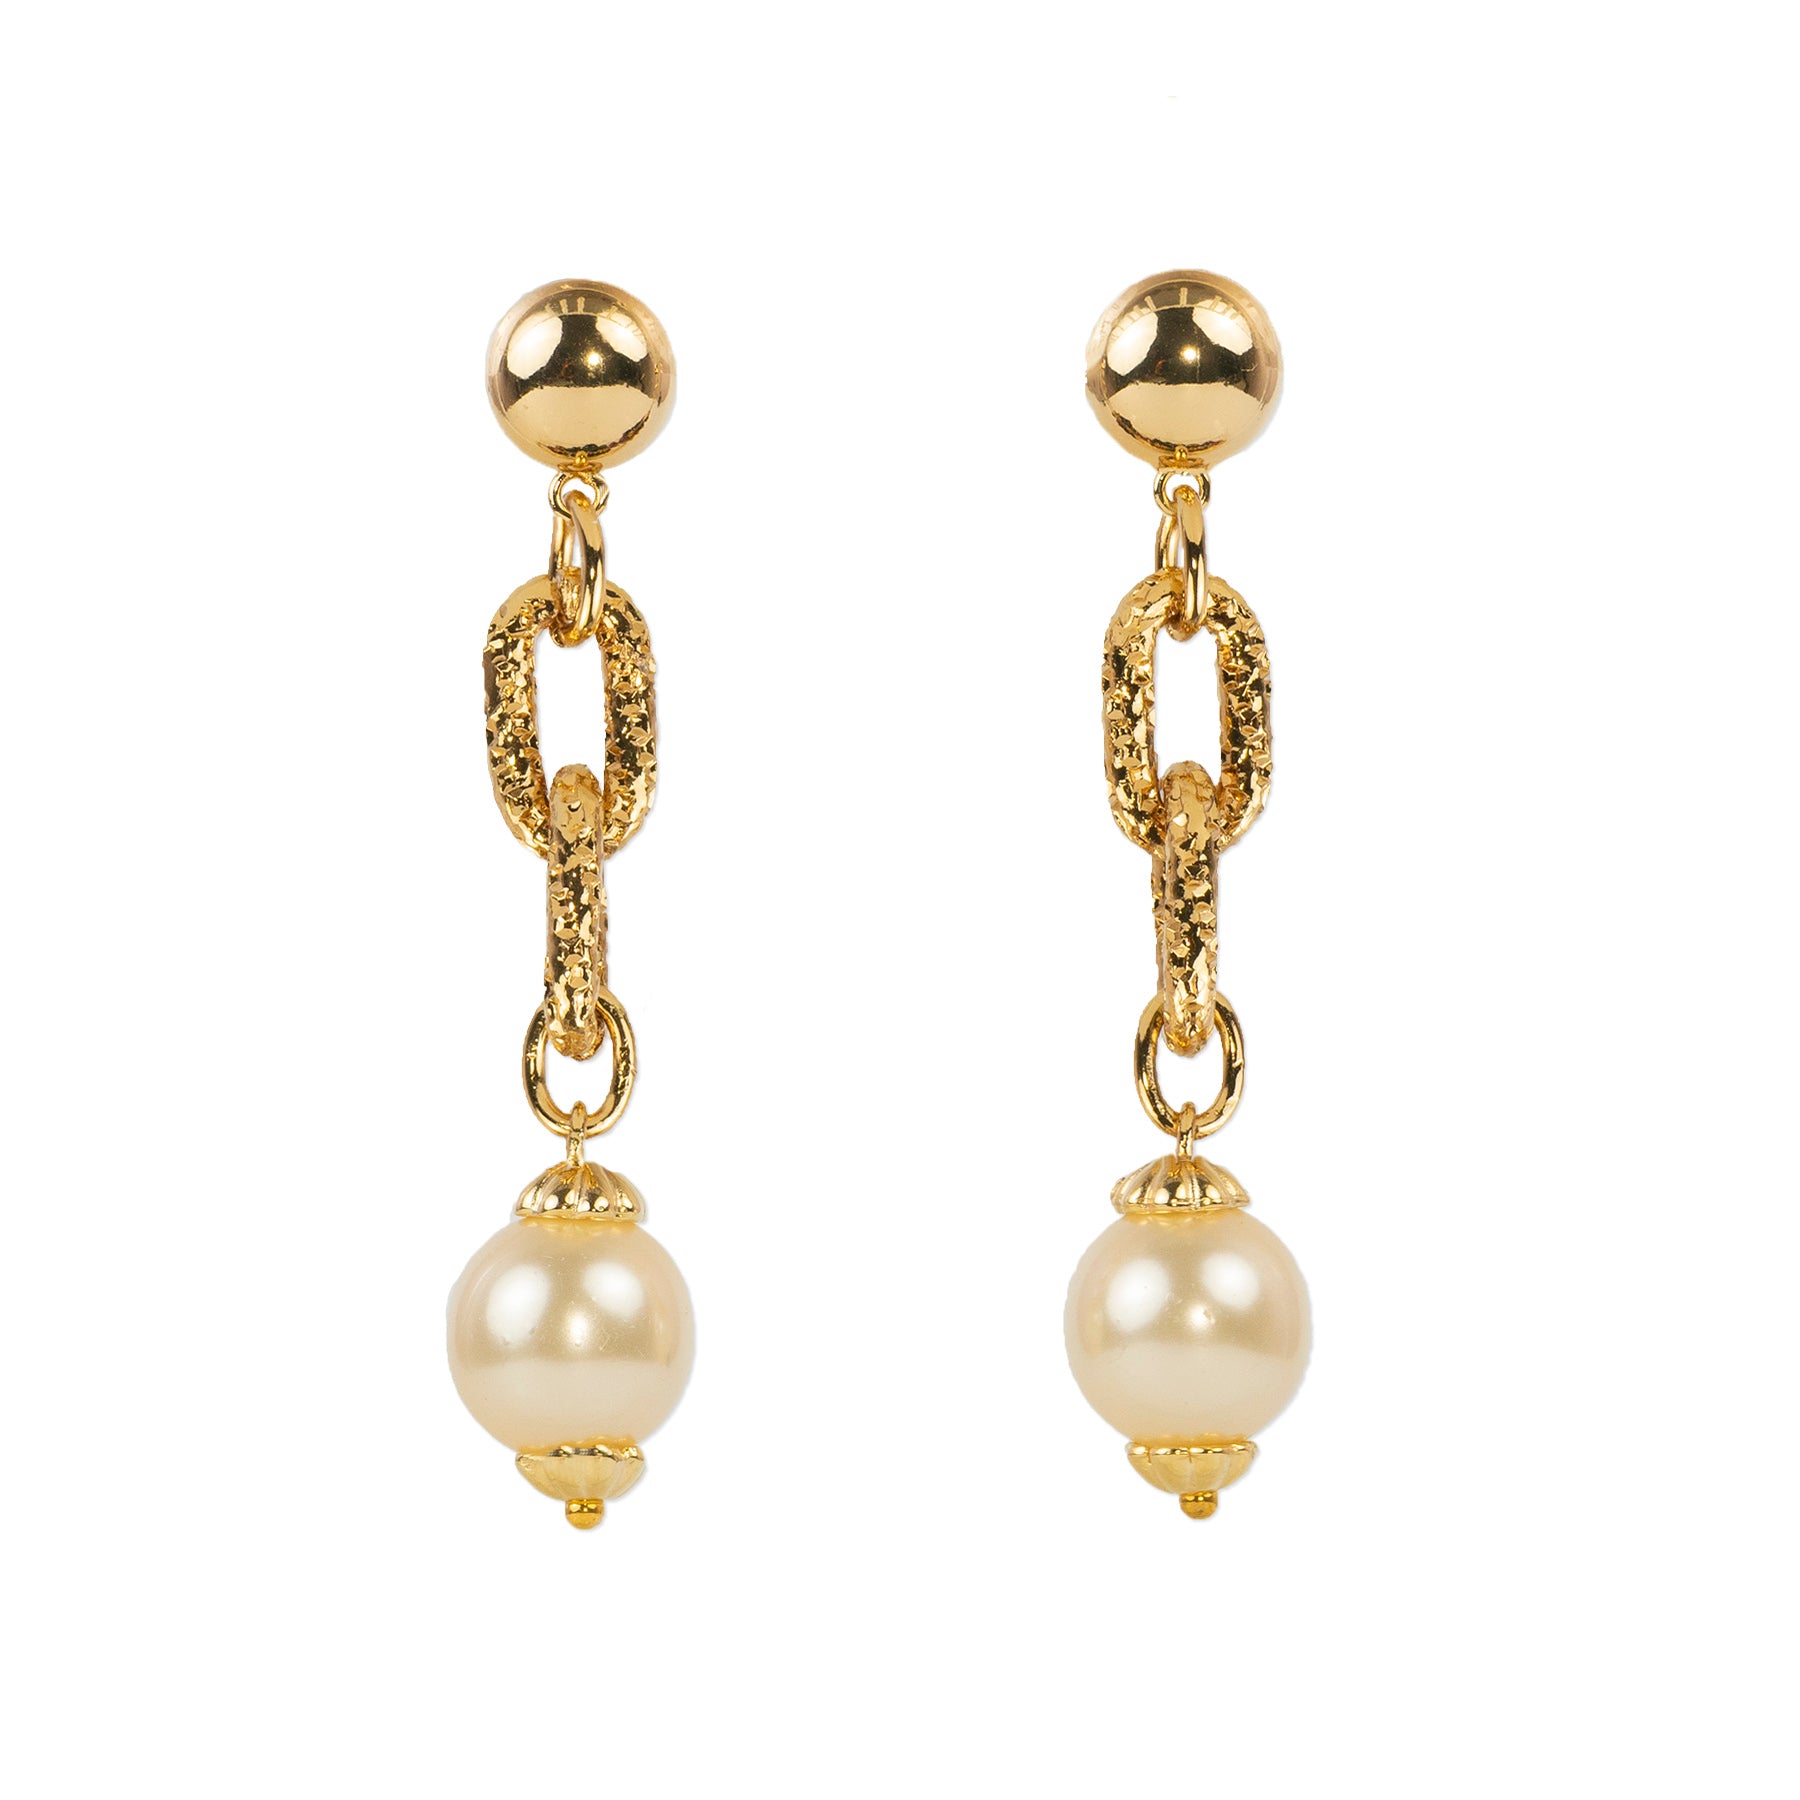 Chain and pearl drop earrings